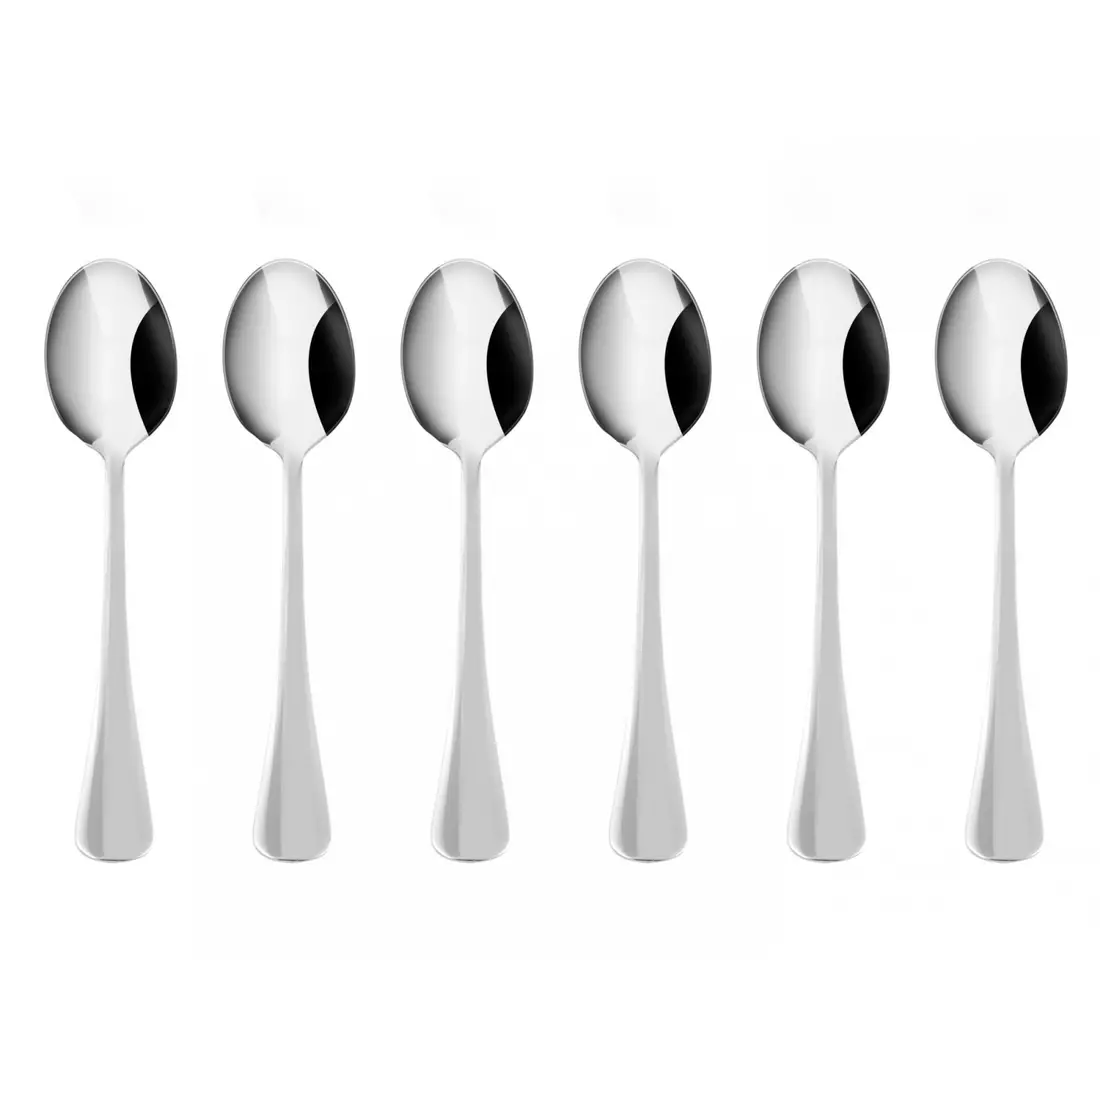 KULIG PAROS set of 6 coffee spoons, silver